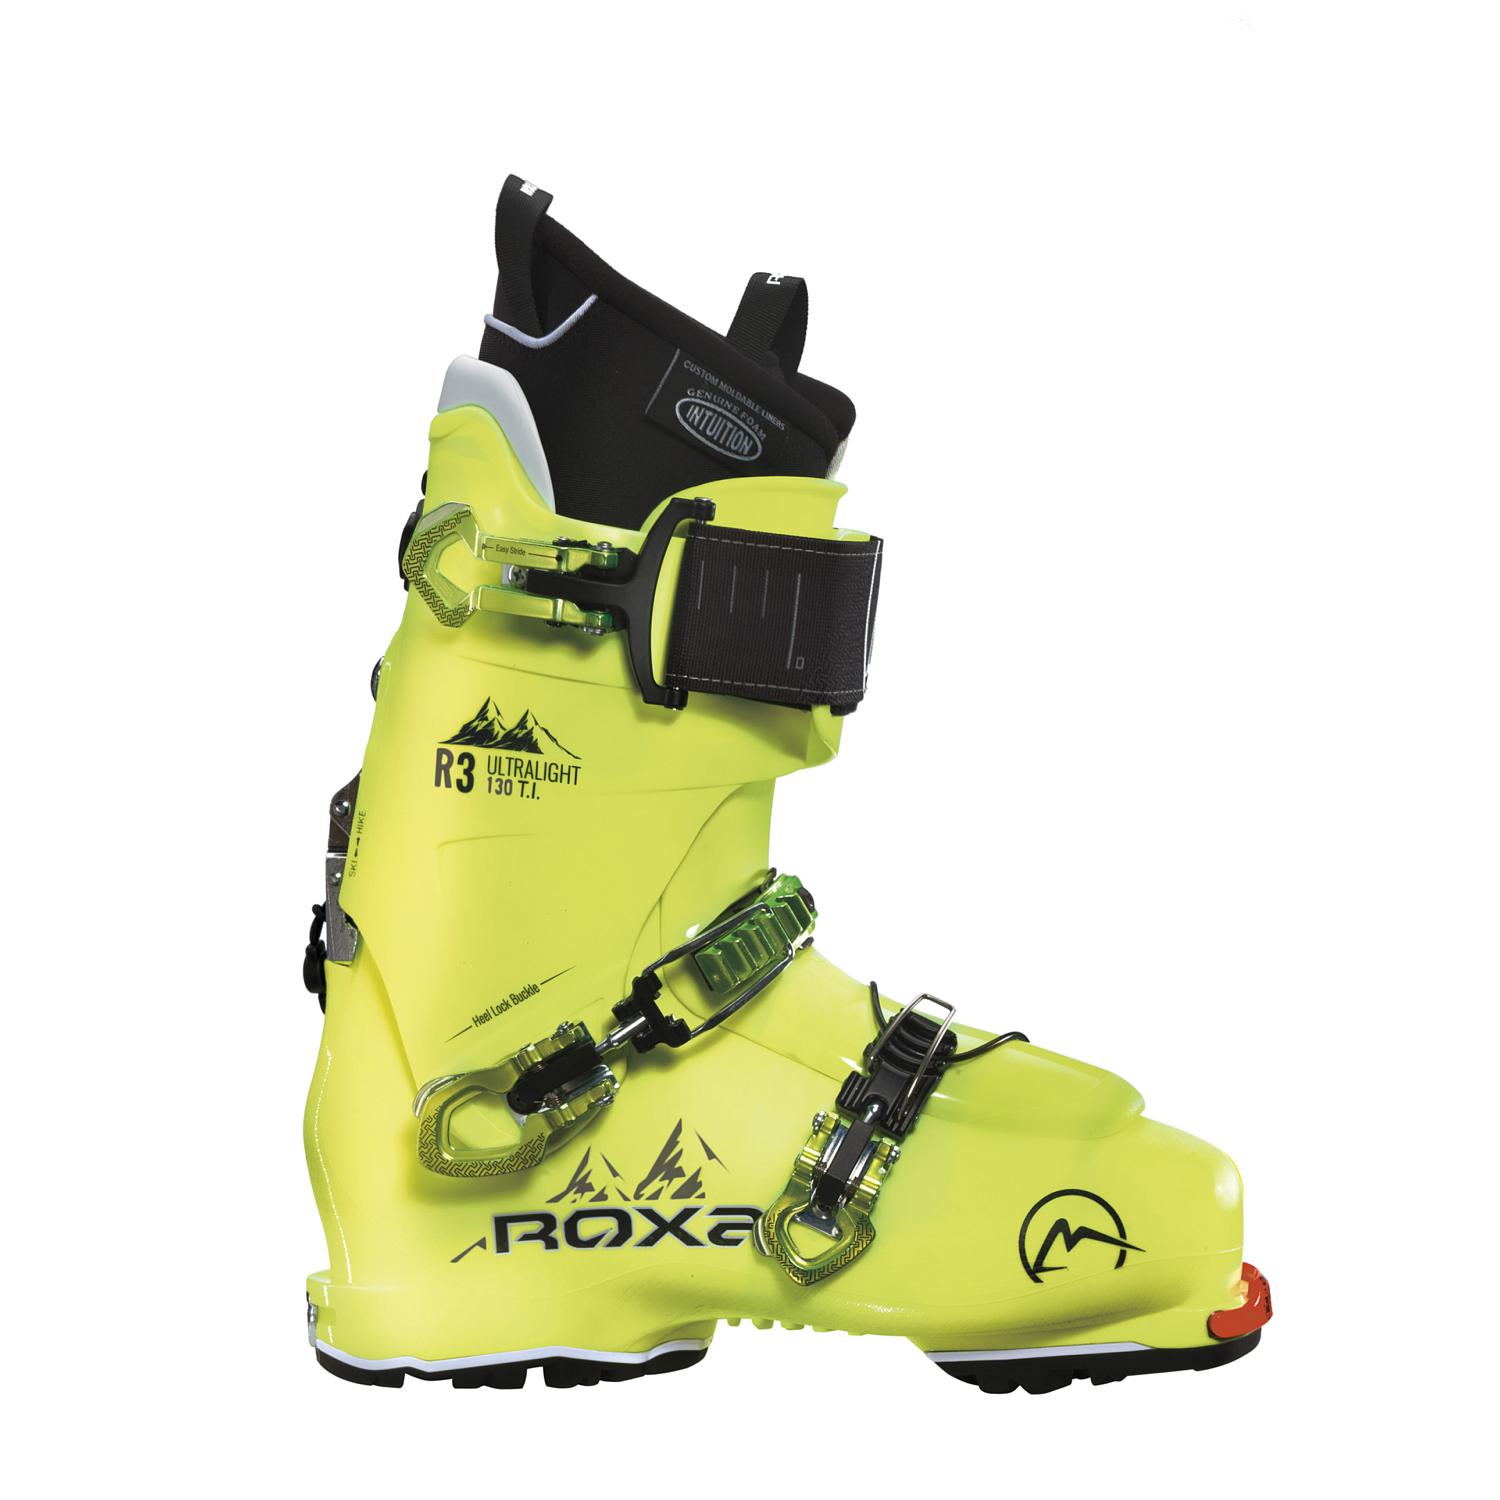 Горнолыжные ботинки ROXA R3 130 TI I.R. Gripwalk Lime/Lime/Lime